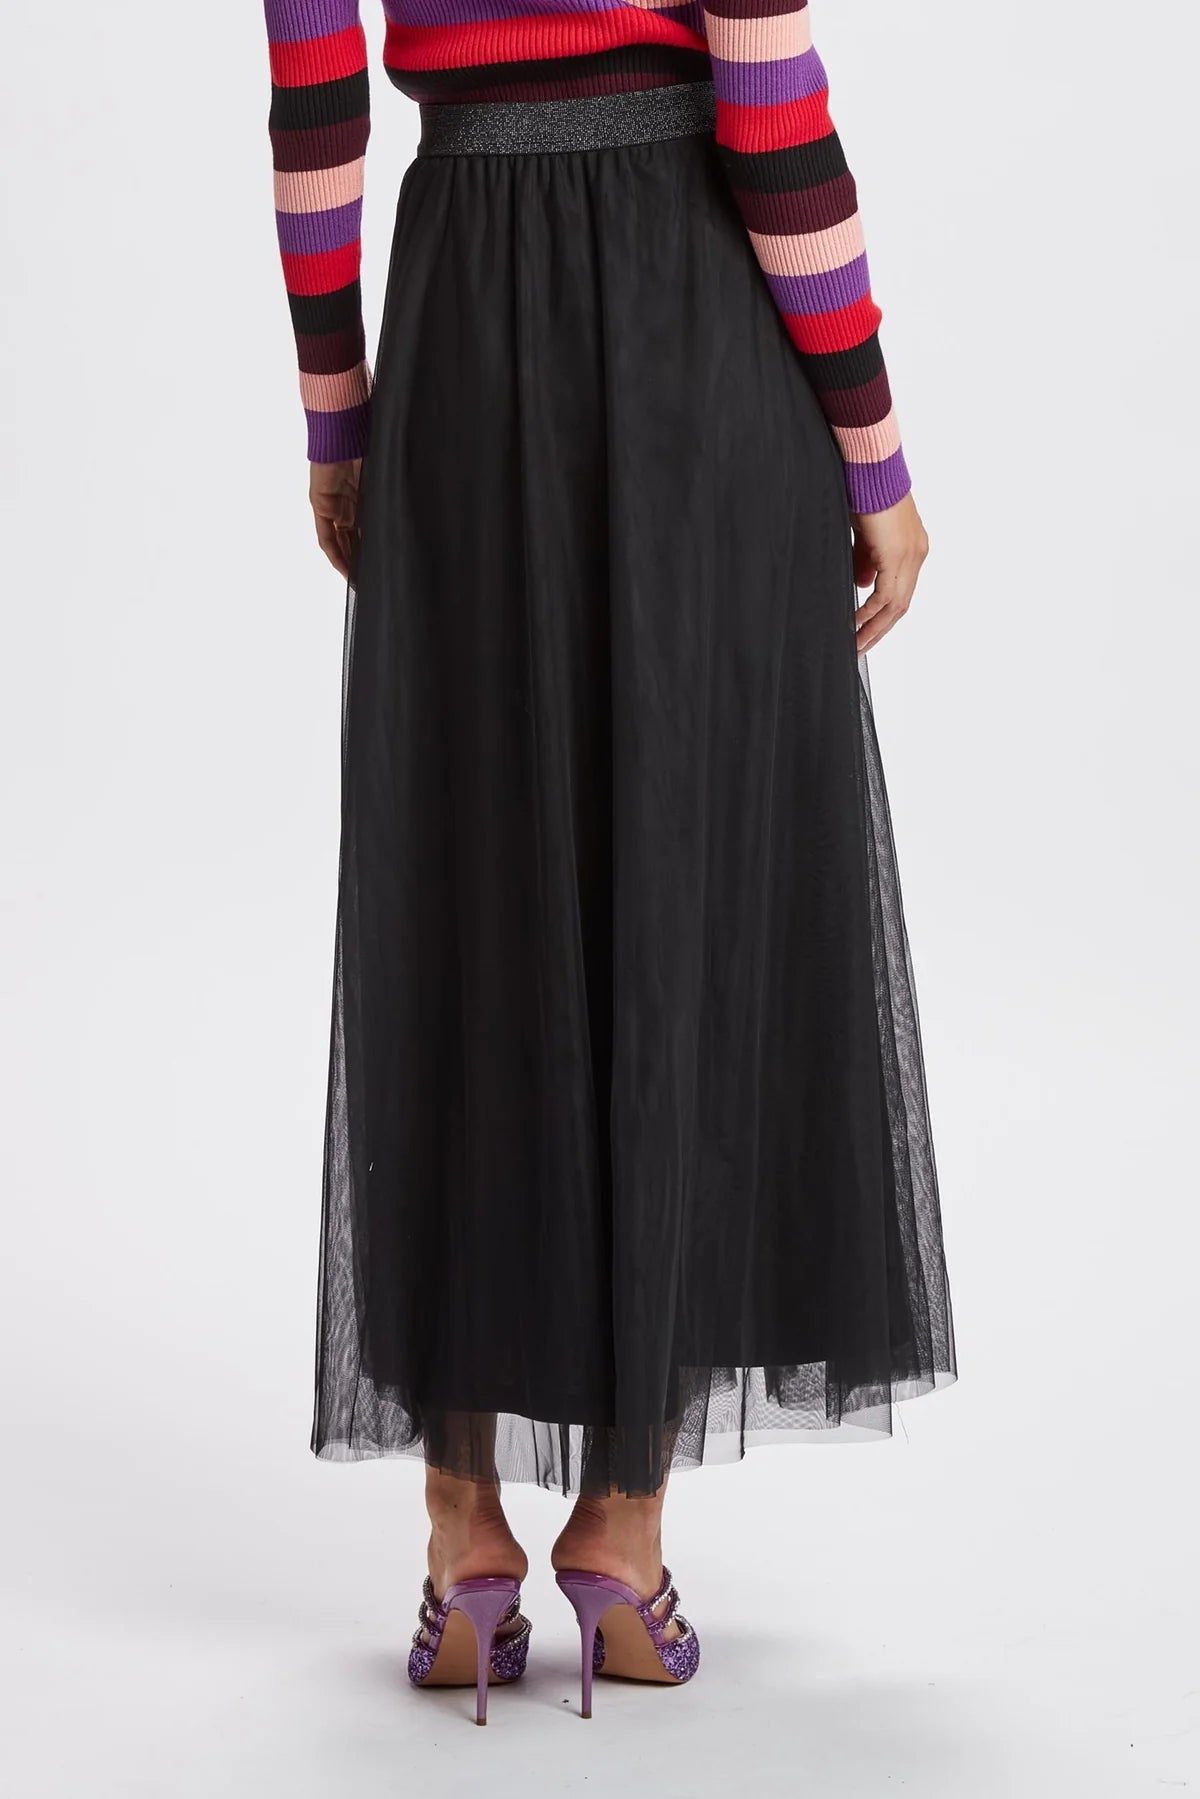 Nümph Nuea Tulle Maxi Skirt in Caviar Black